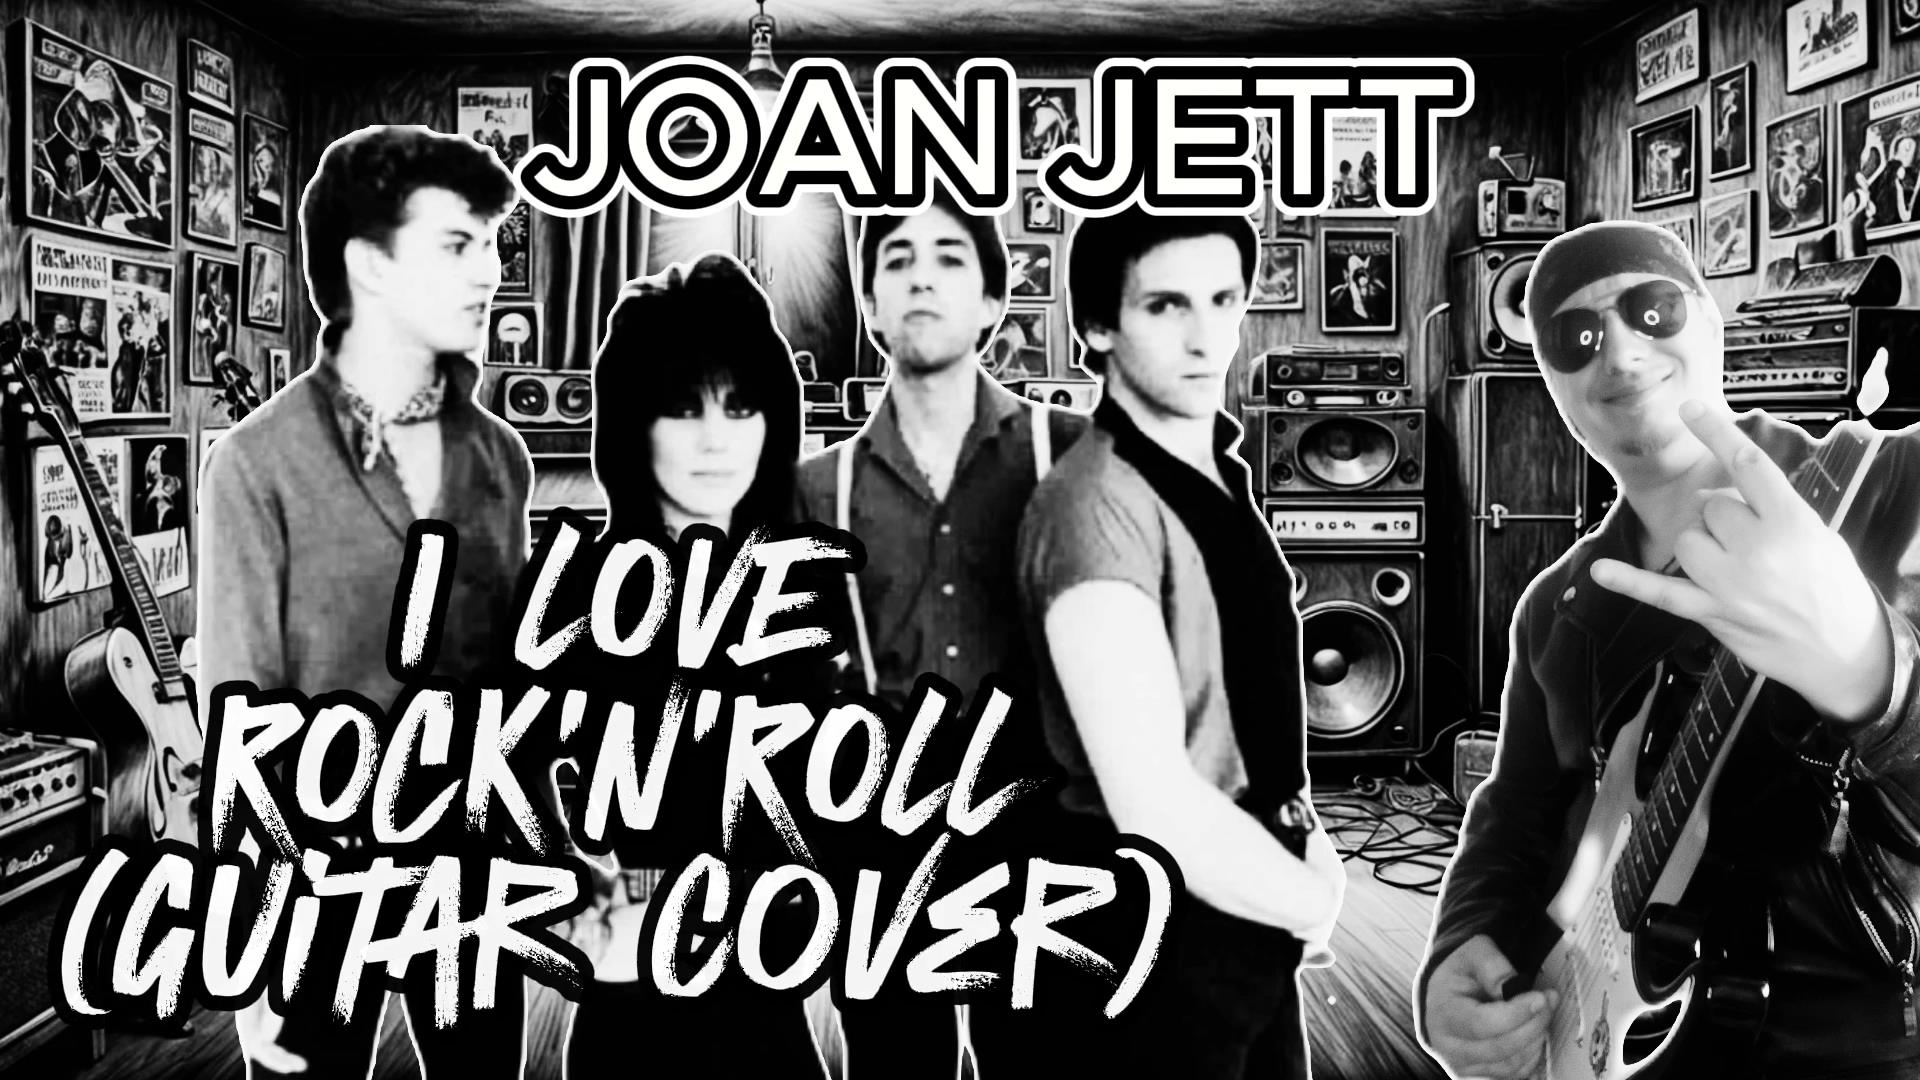 JOAN JETT - I LOVE ROCK'N'ROLL (Guitar cover)